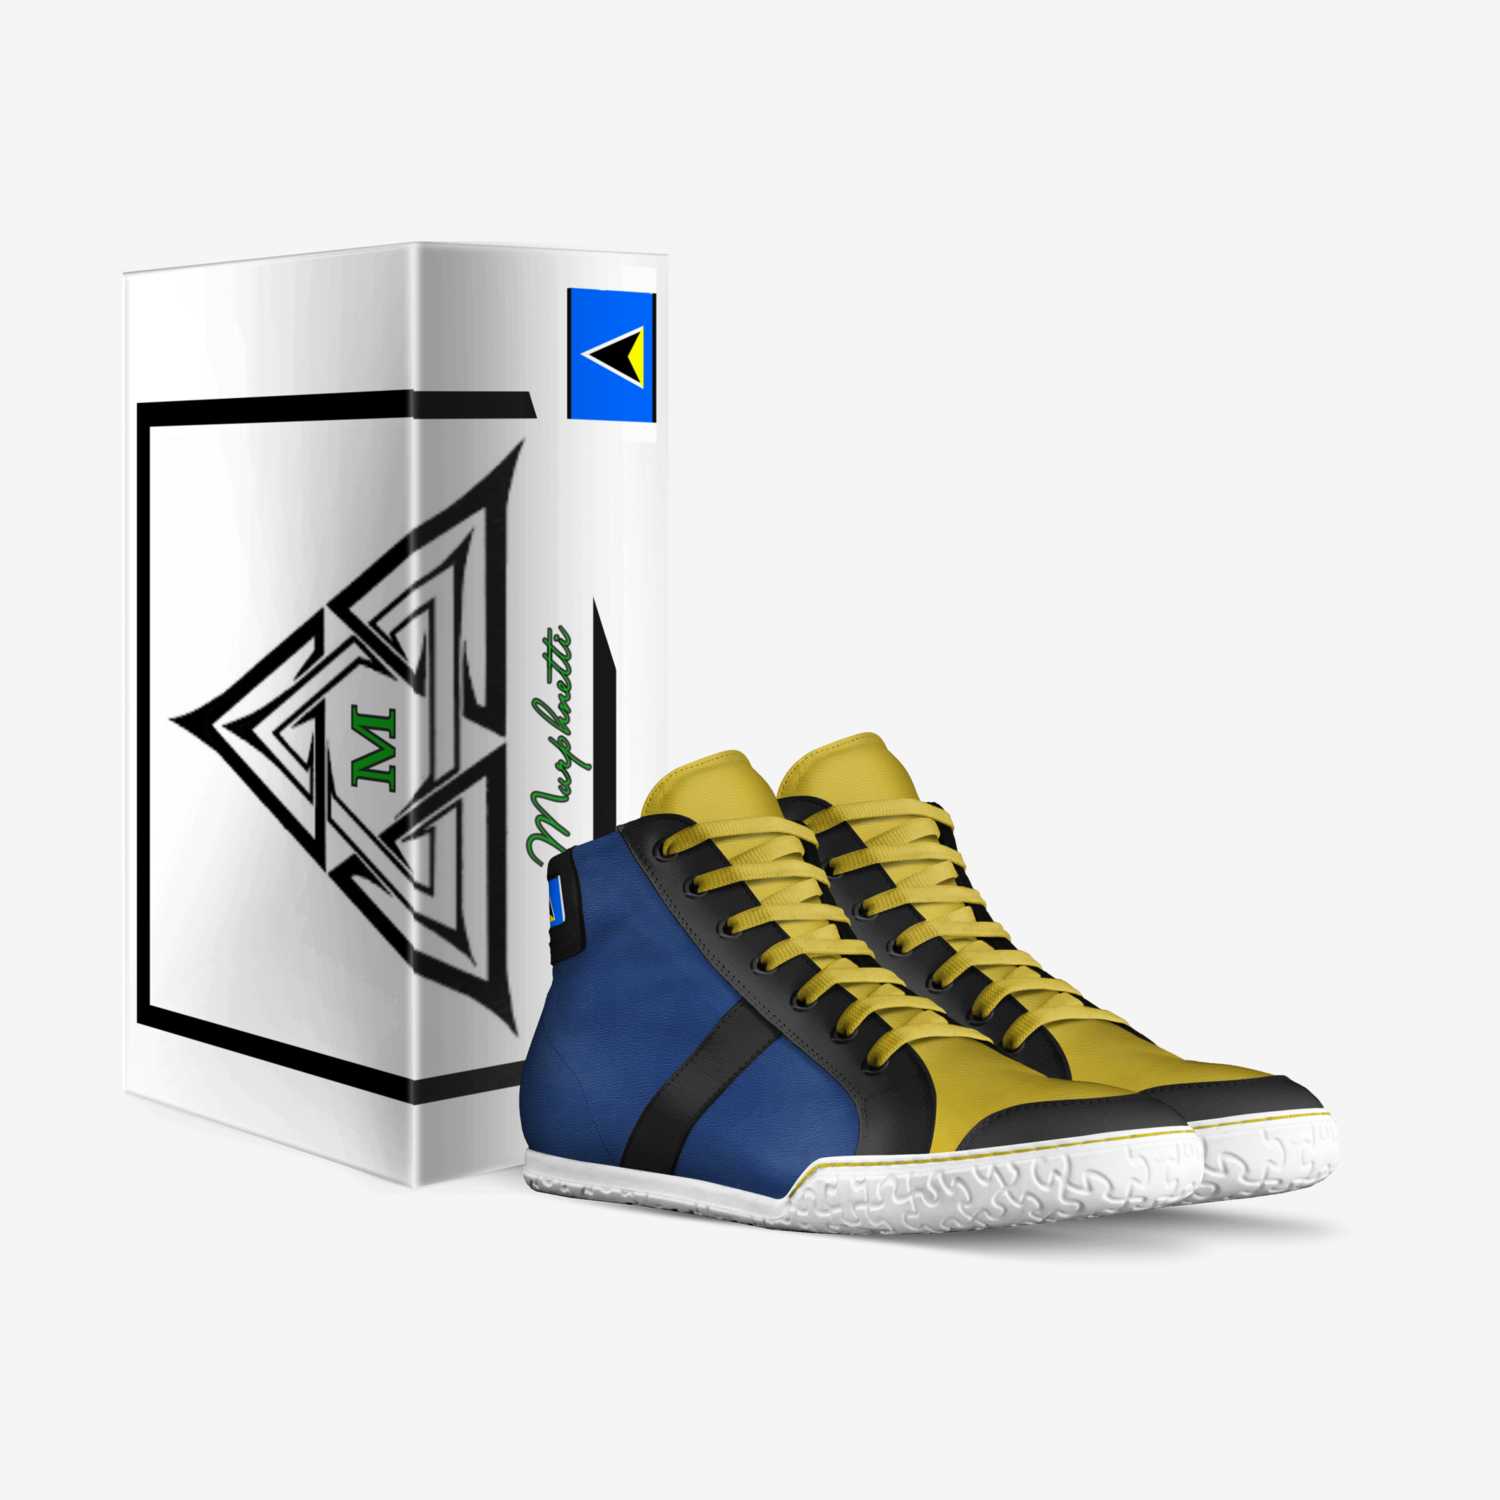 Murphnetti HS-STL custom made in Italy shoes by Tyriek Murphy | Box view